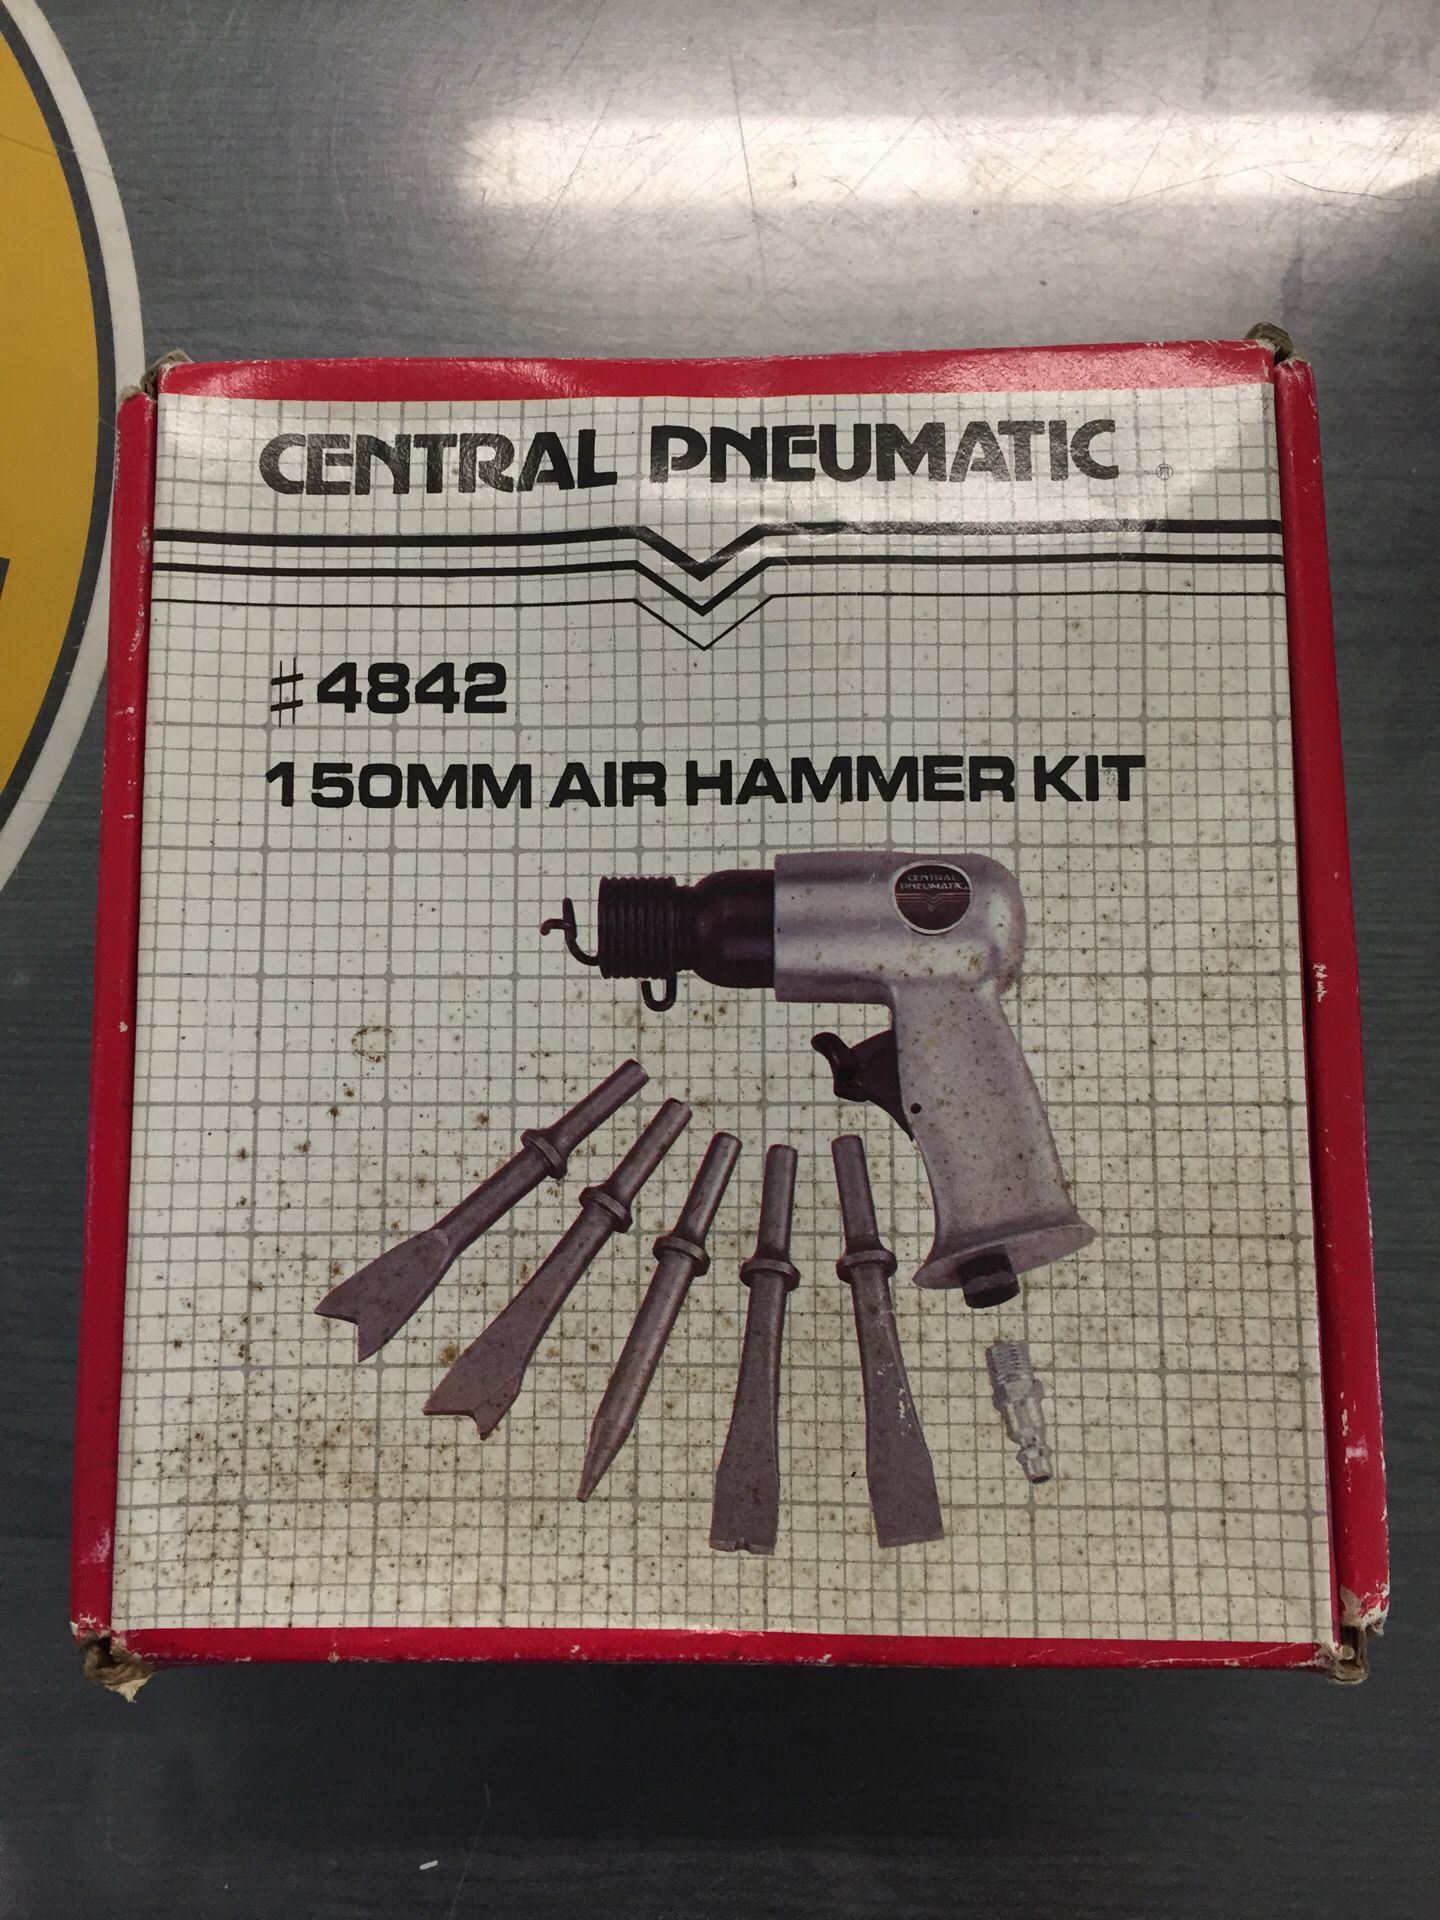 Central pneumatic #4842 150mm air hammer kit